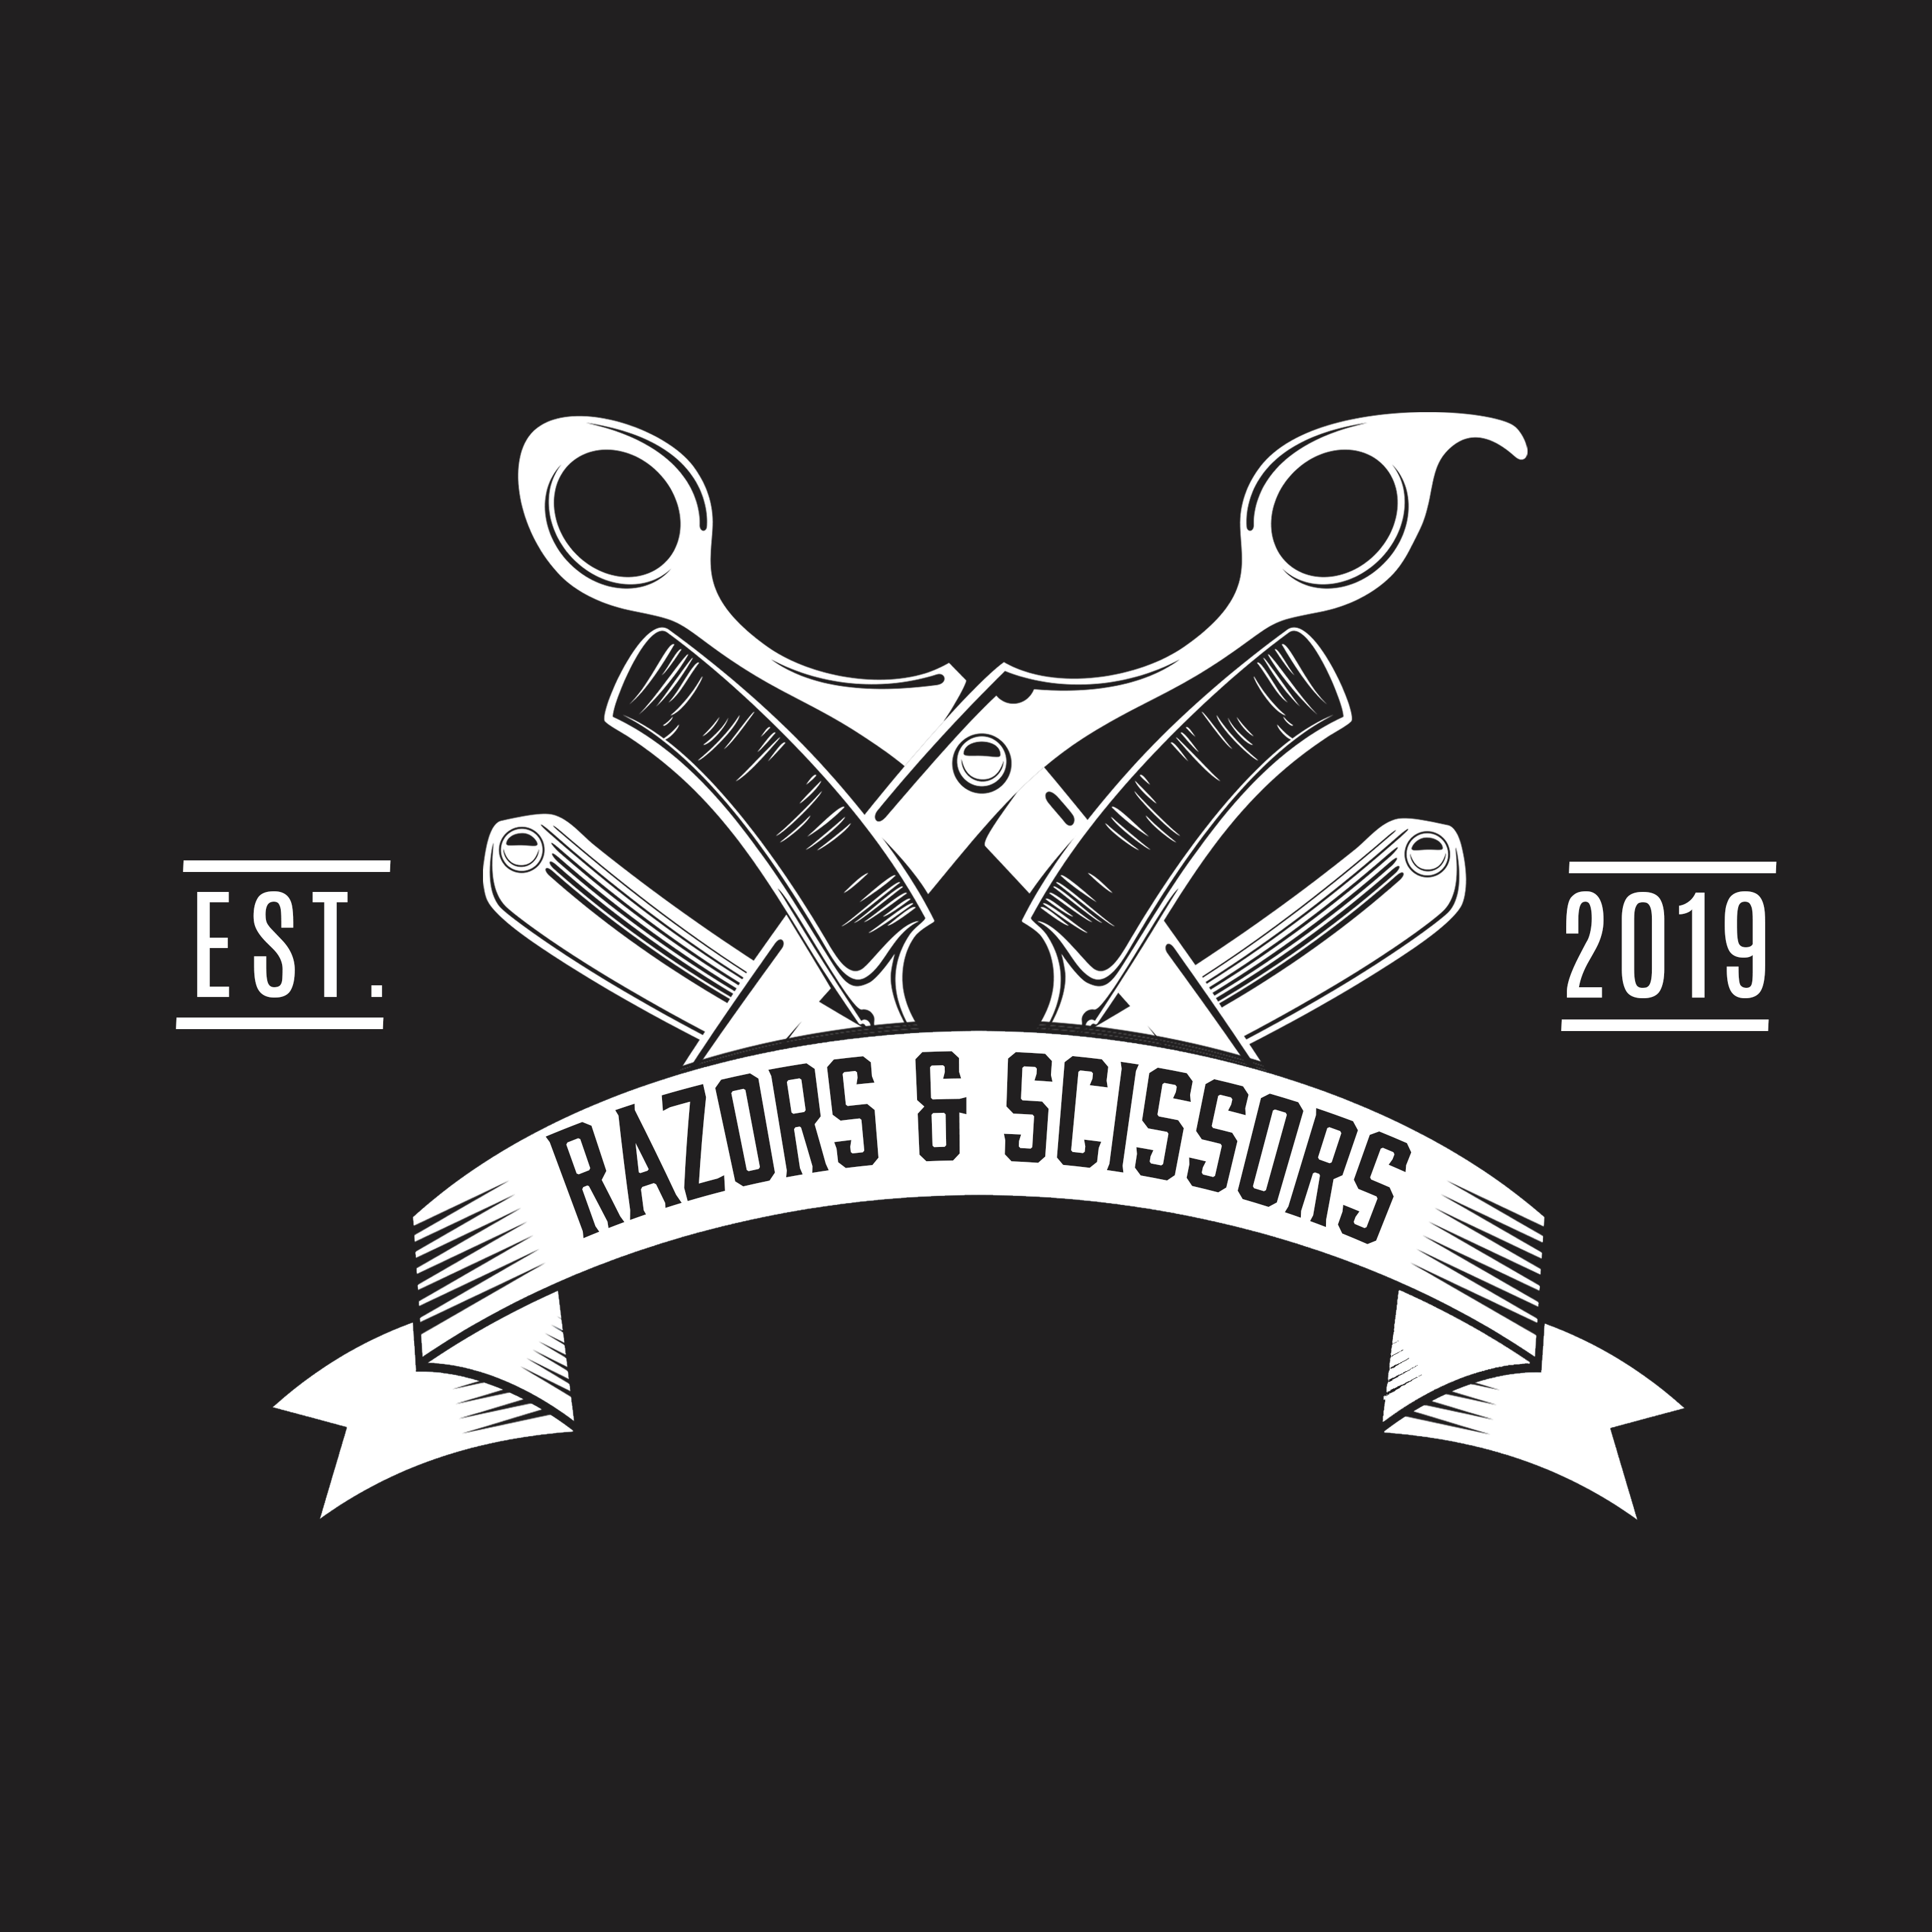 Razors & Scissors - Men's grooming lounge